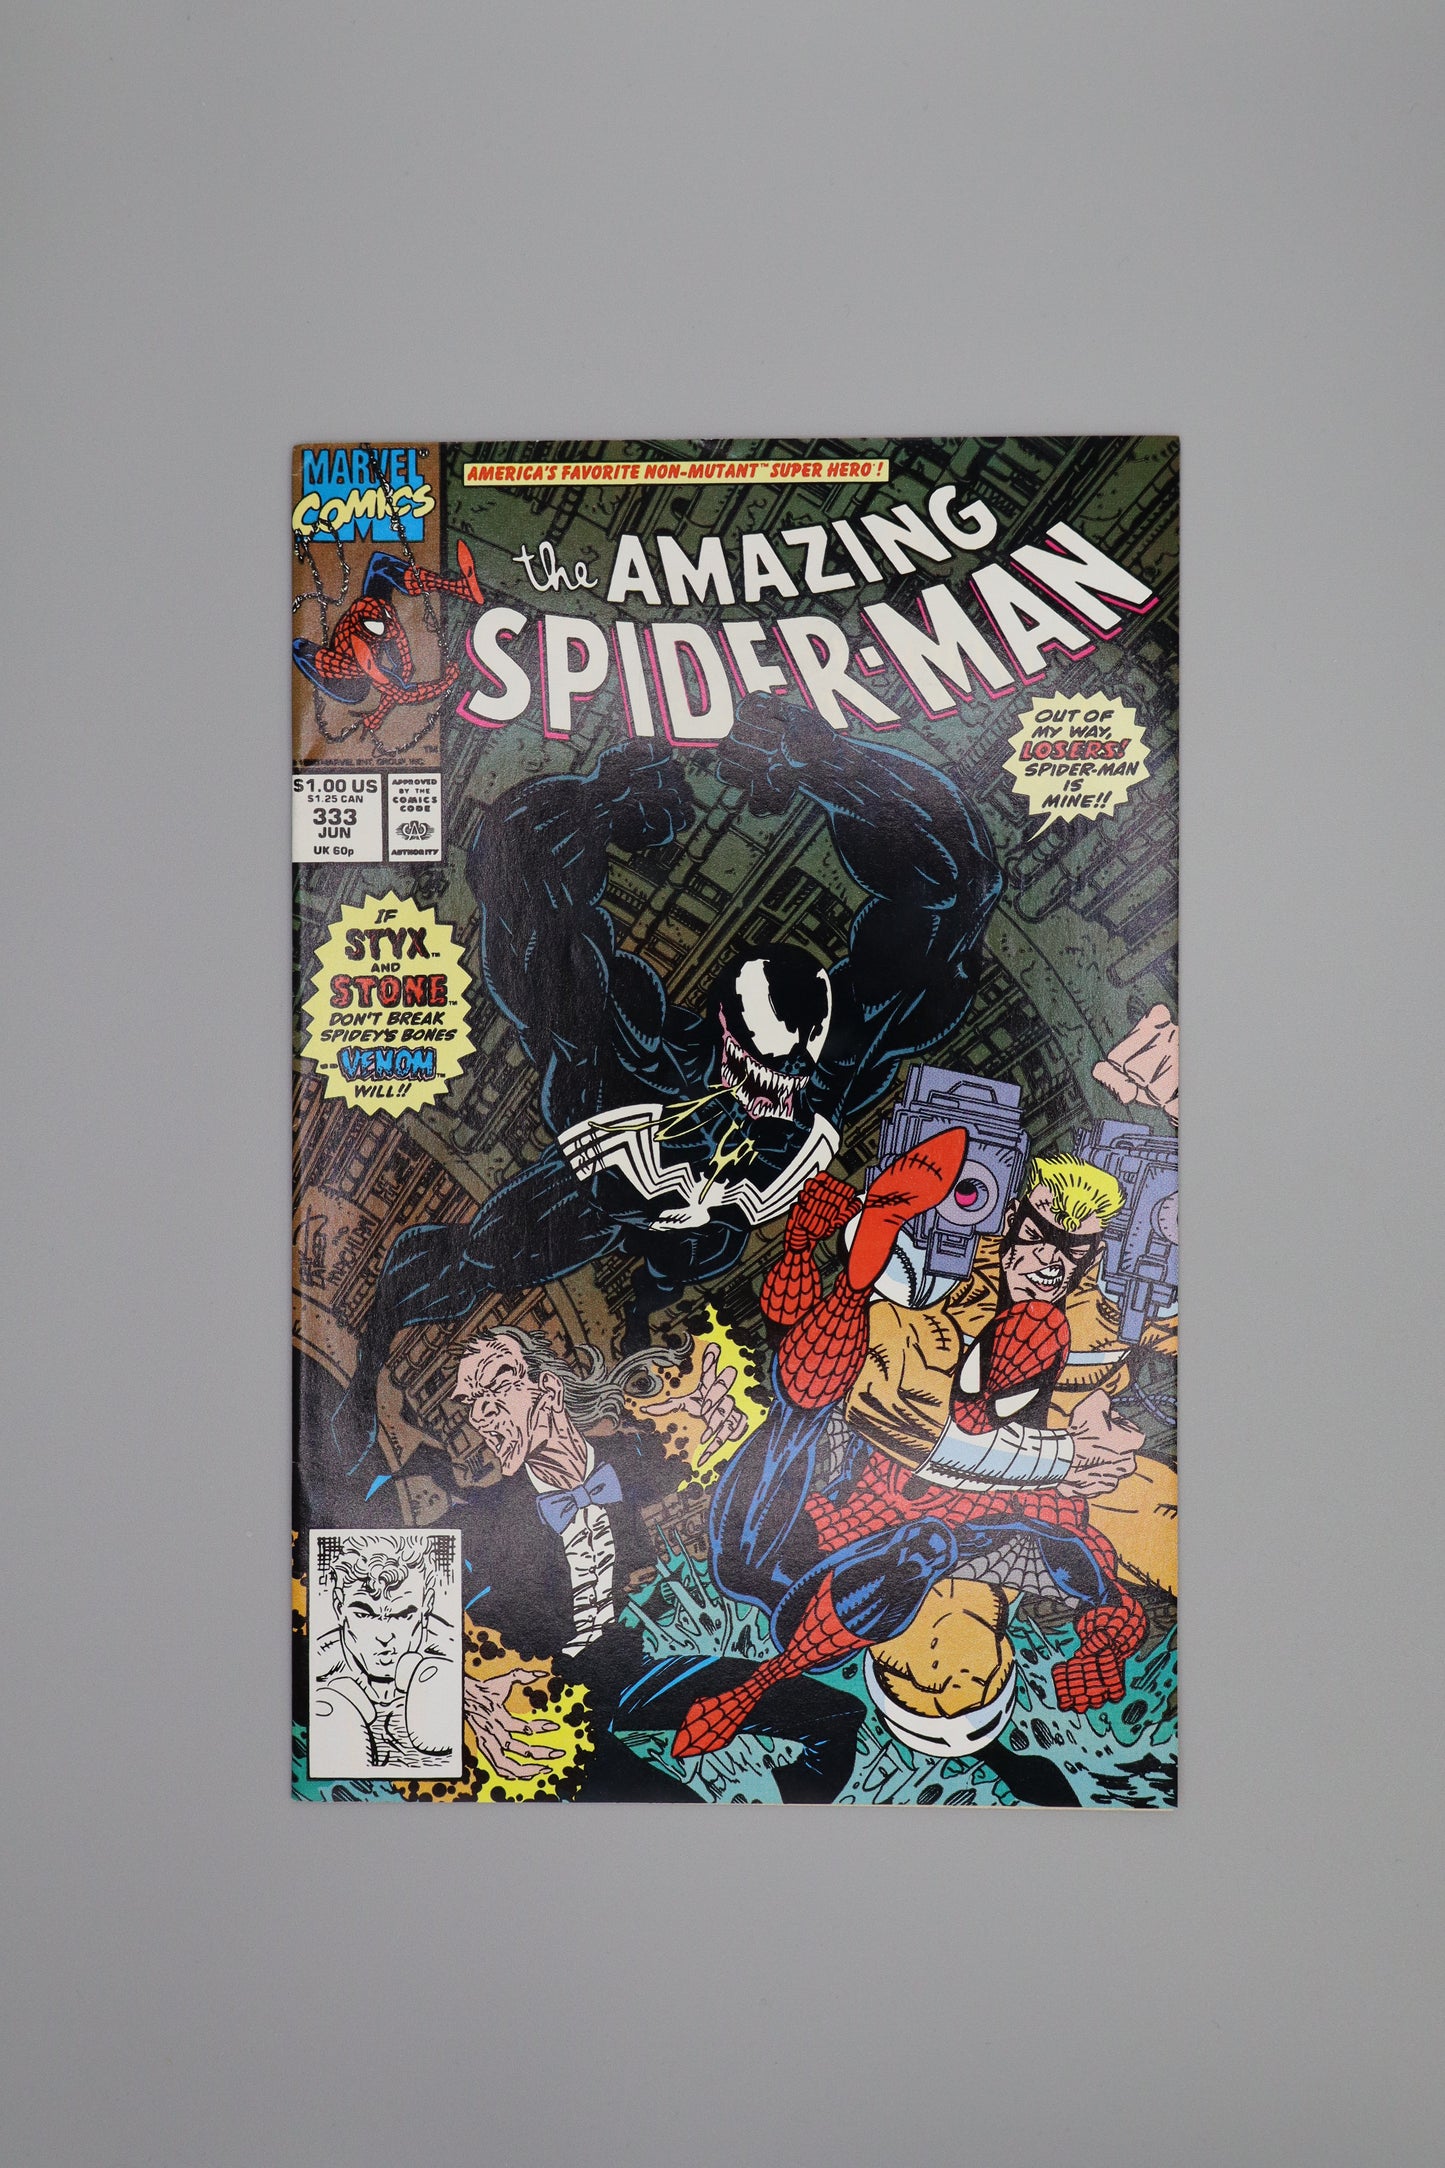 The Amazing Spider-man #333